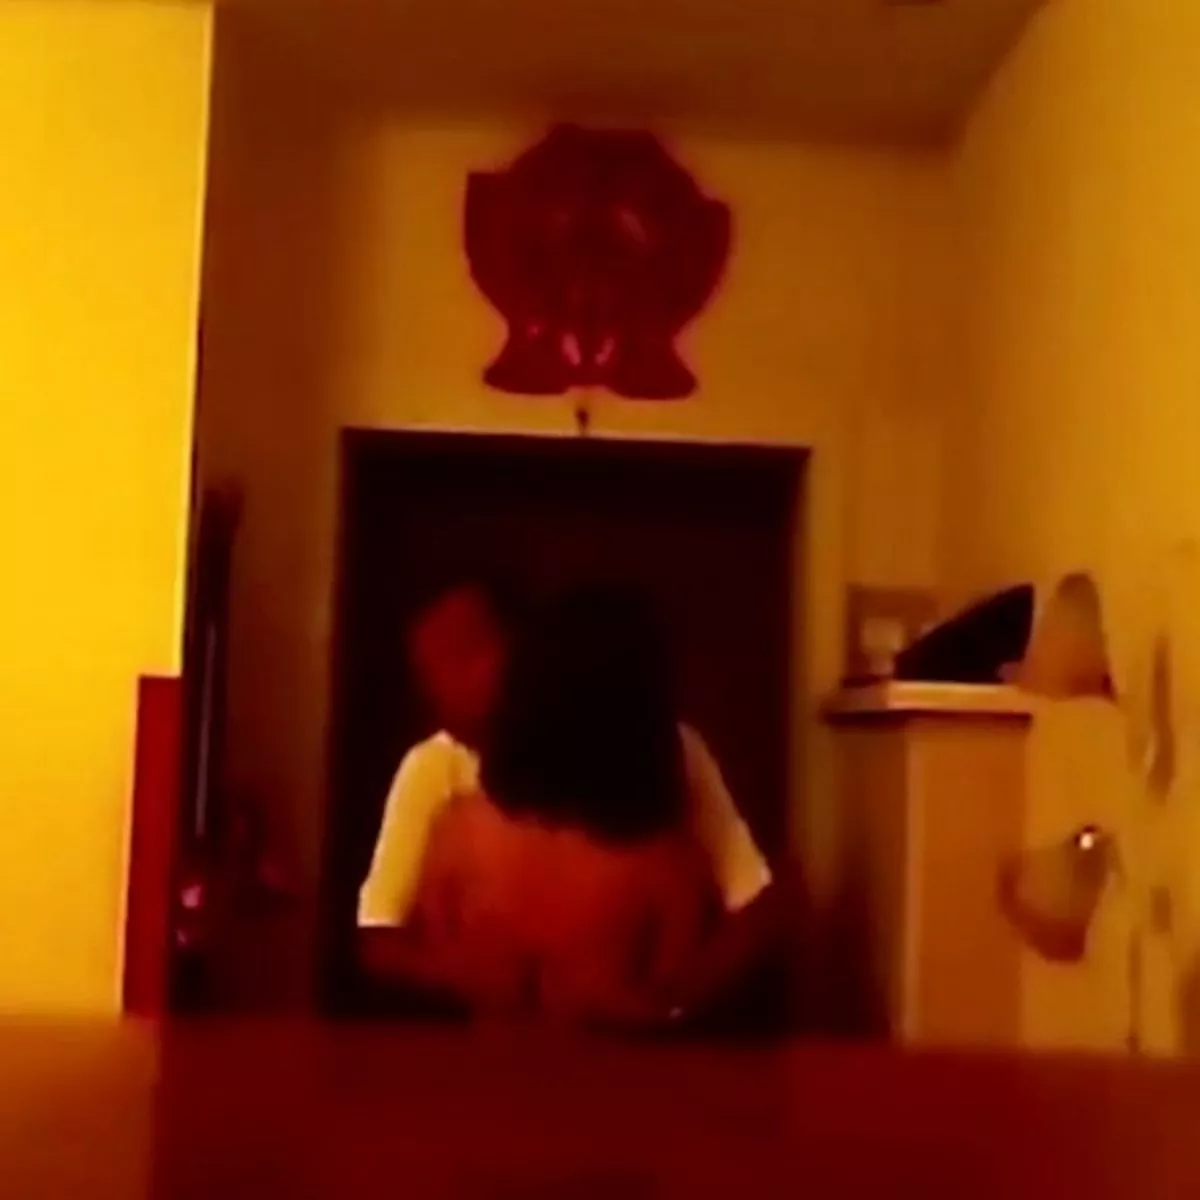 alon gurvitch share real cheating wife hidden cam photos